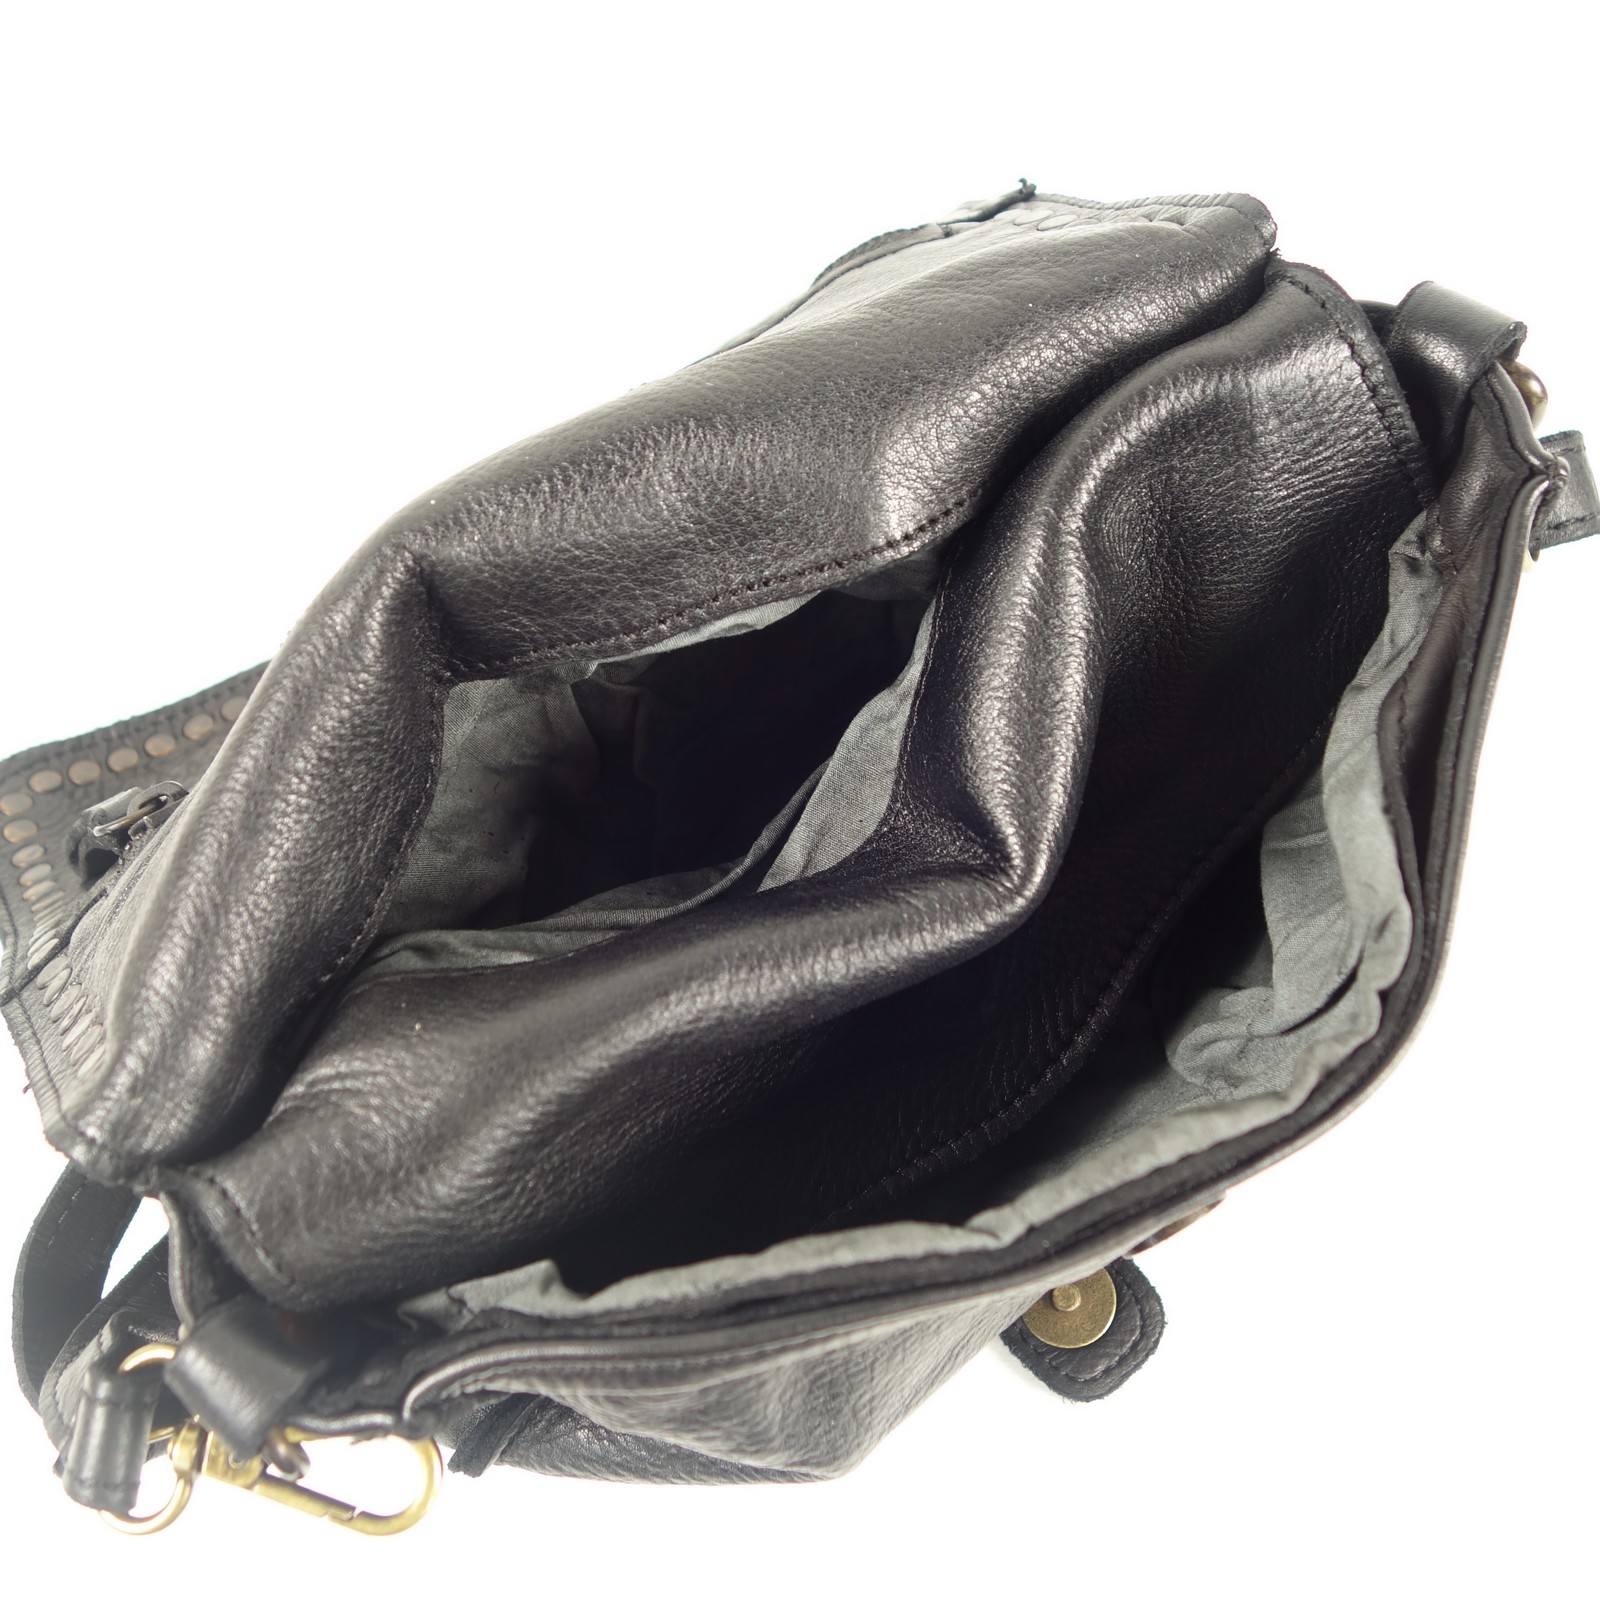 Mini sac à main travers cuir vintage noir Gena / Collection EspritCuir